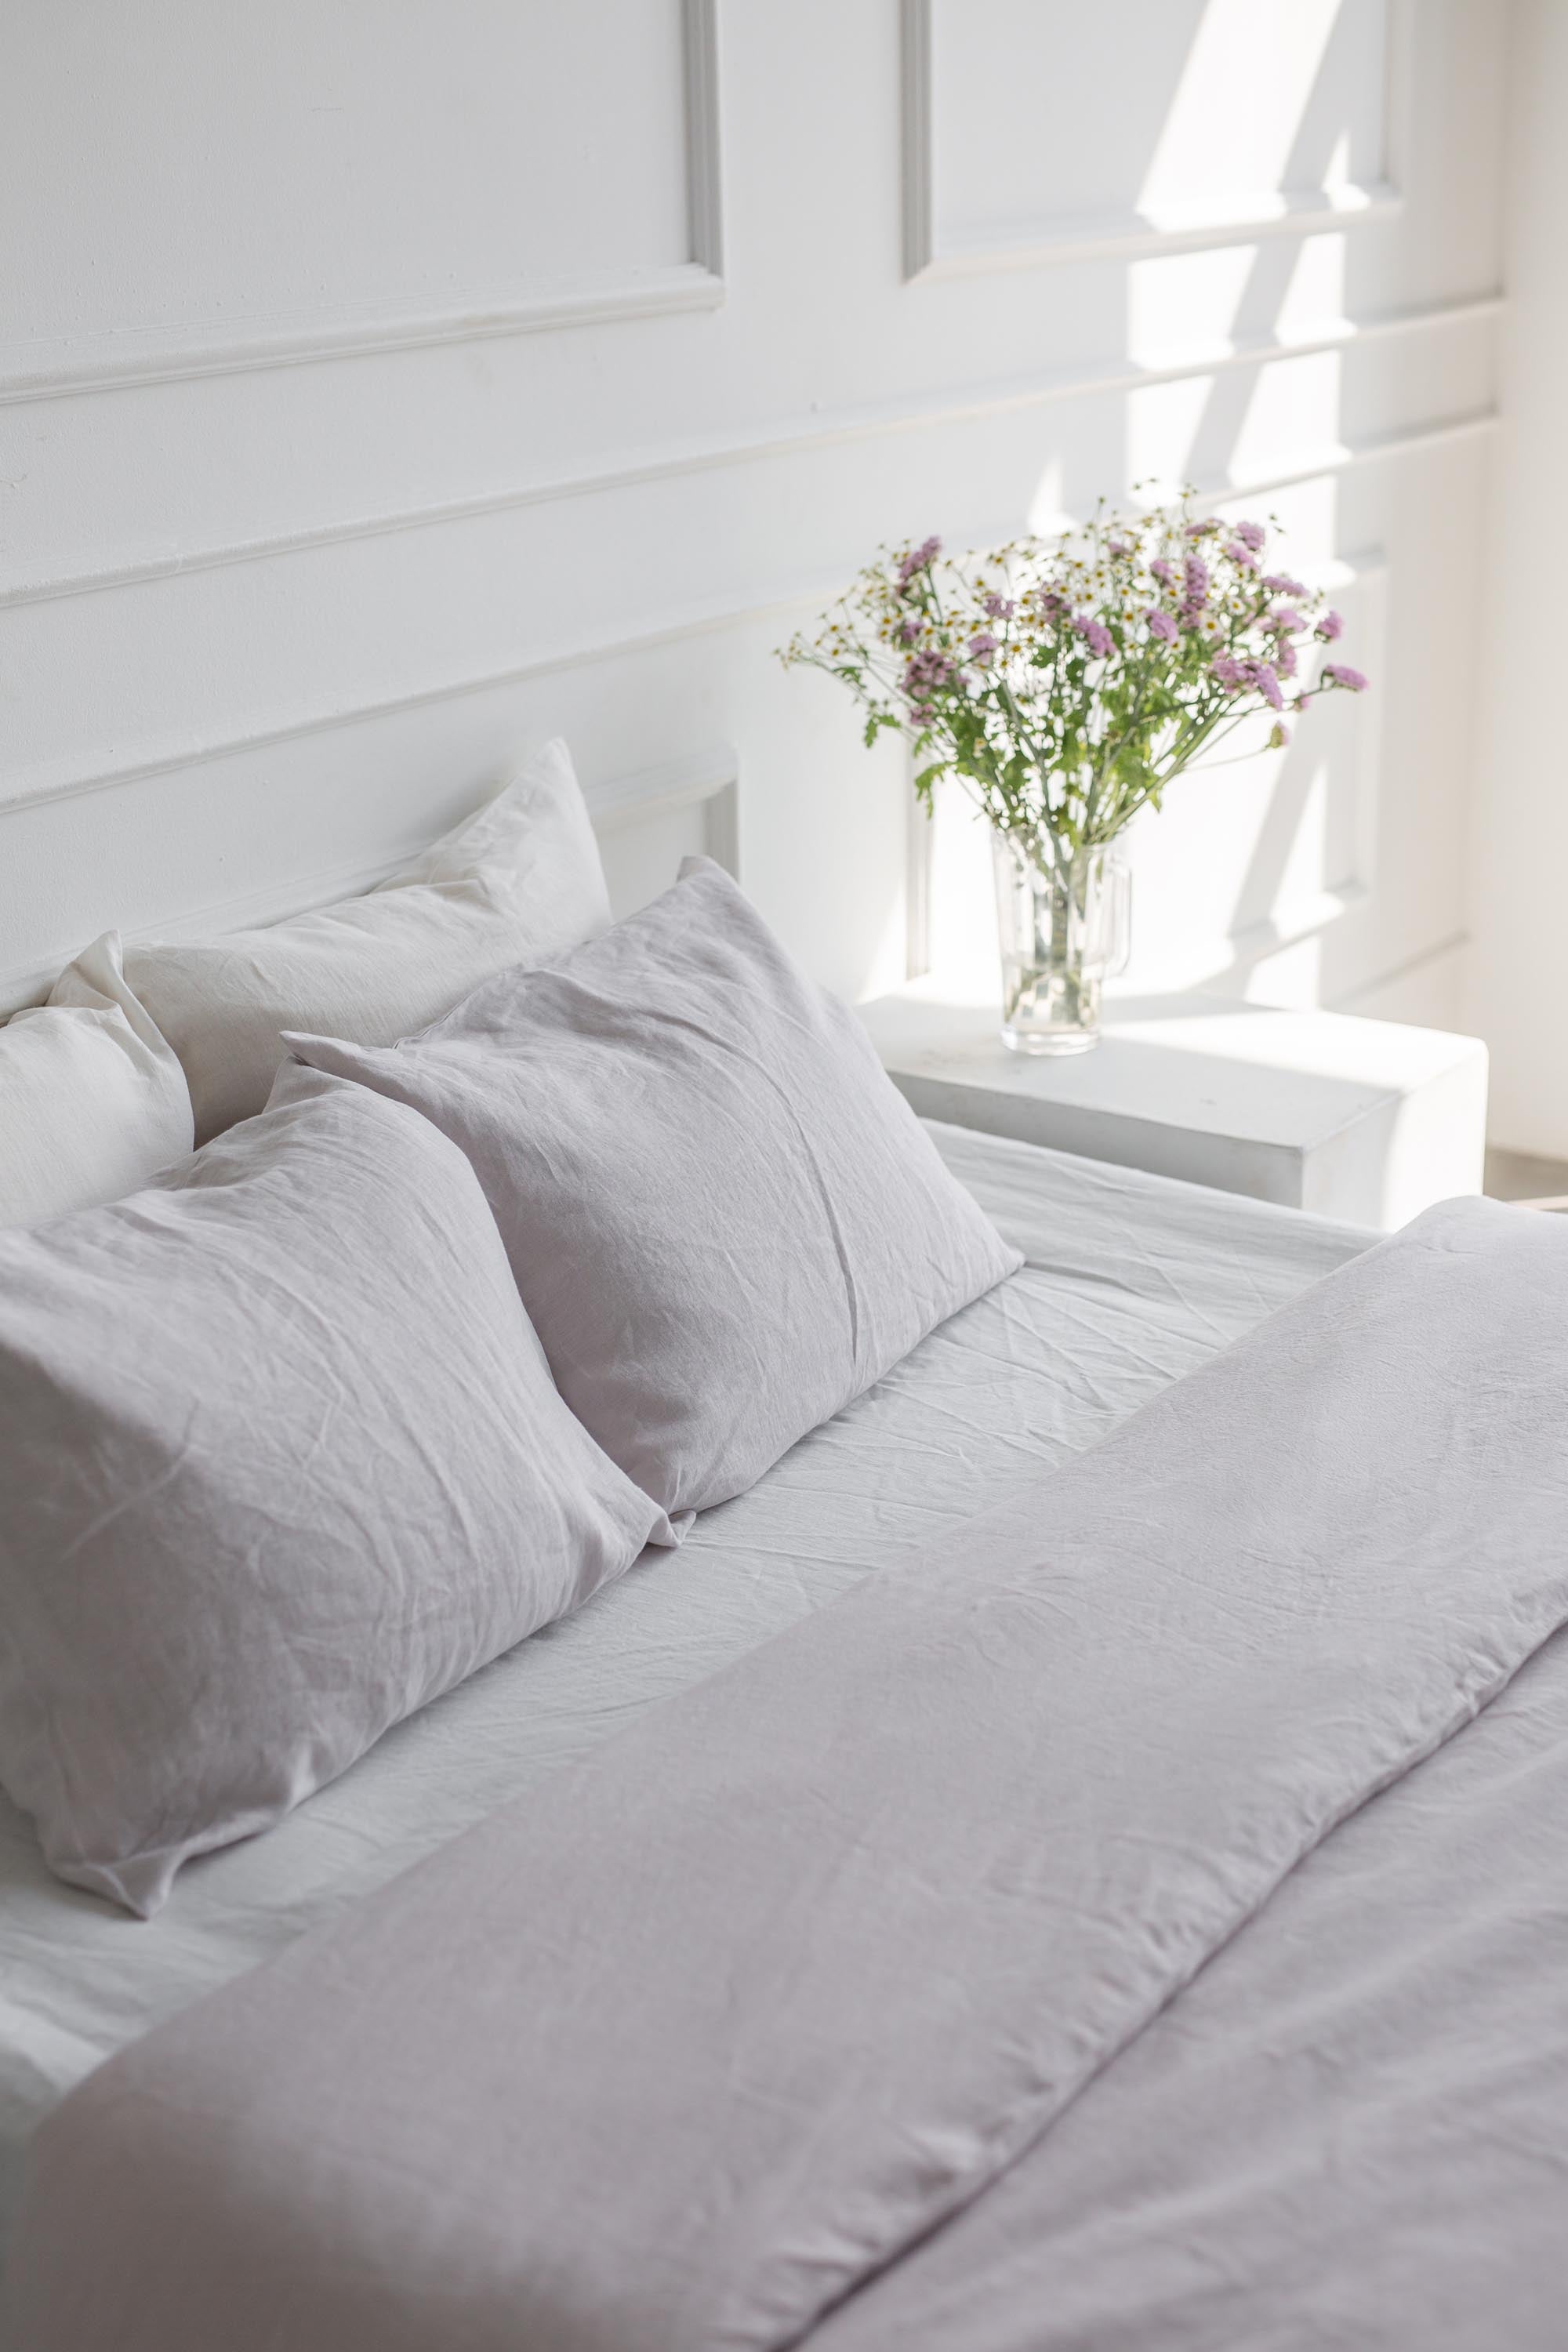 Cream LInen Pillowcase On Tidy Bed By AmourlInen